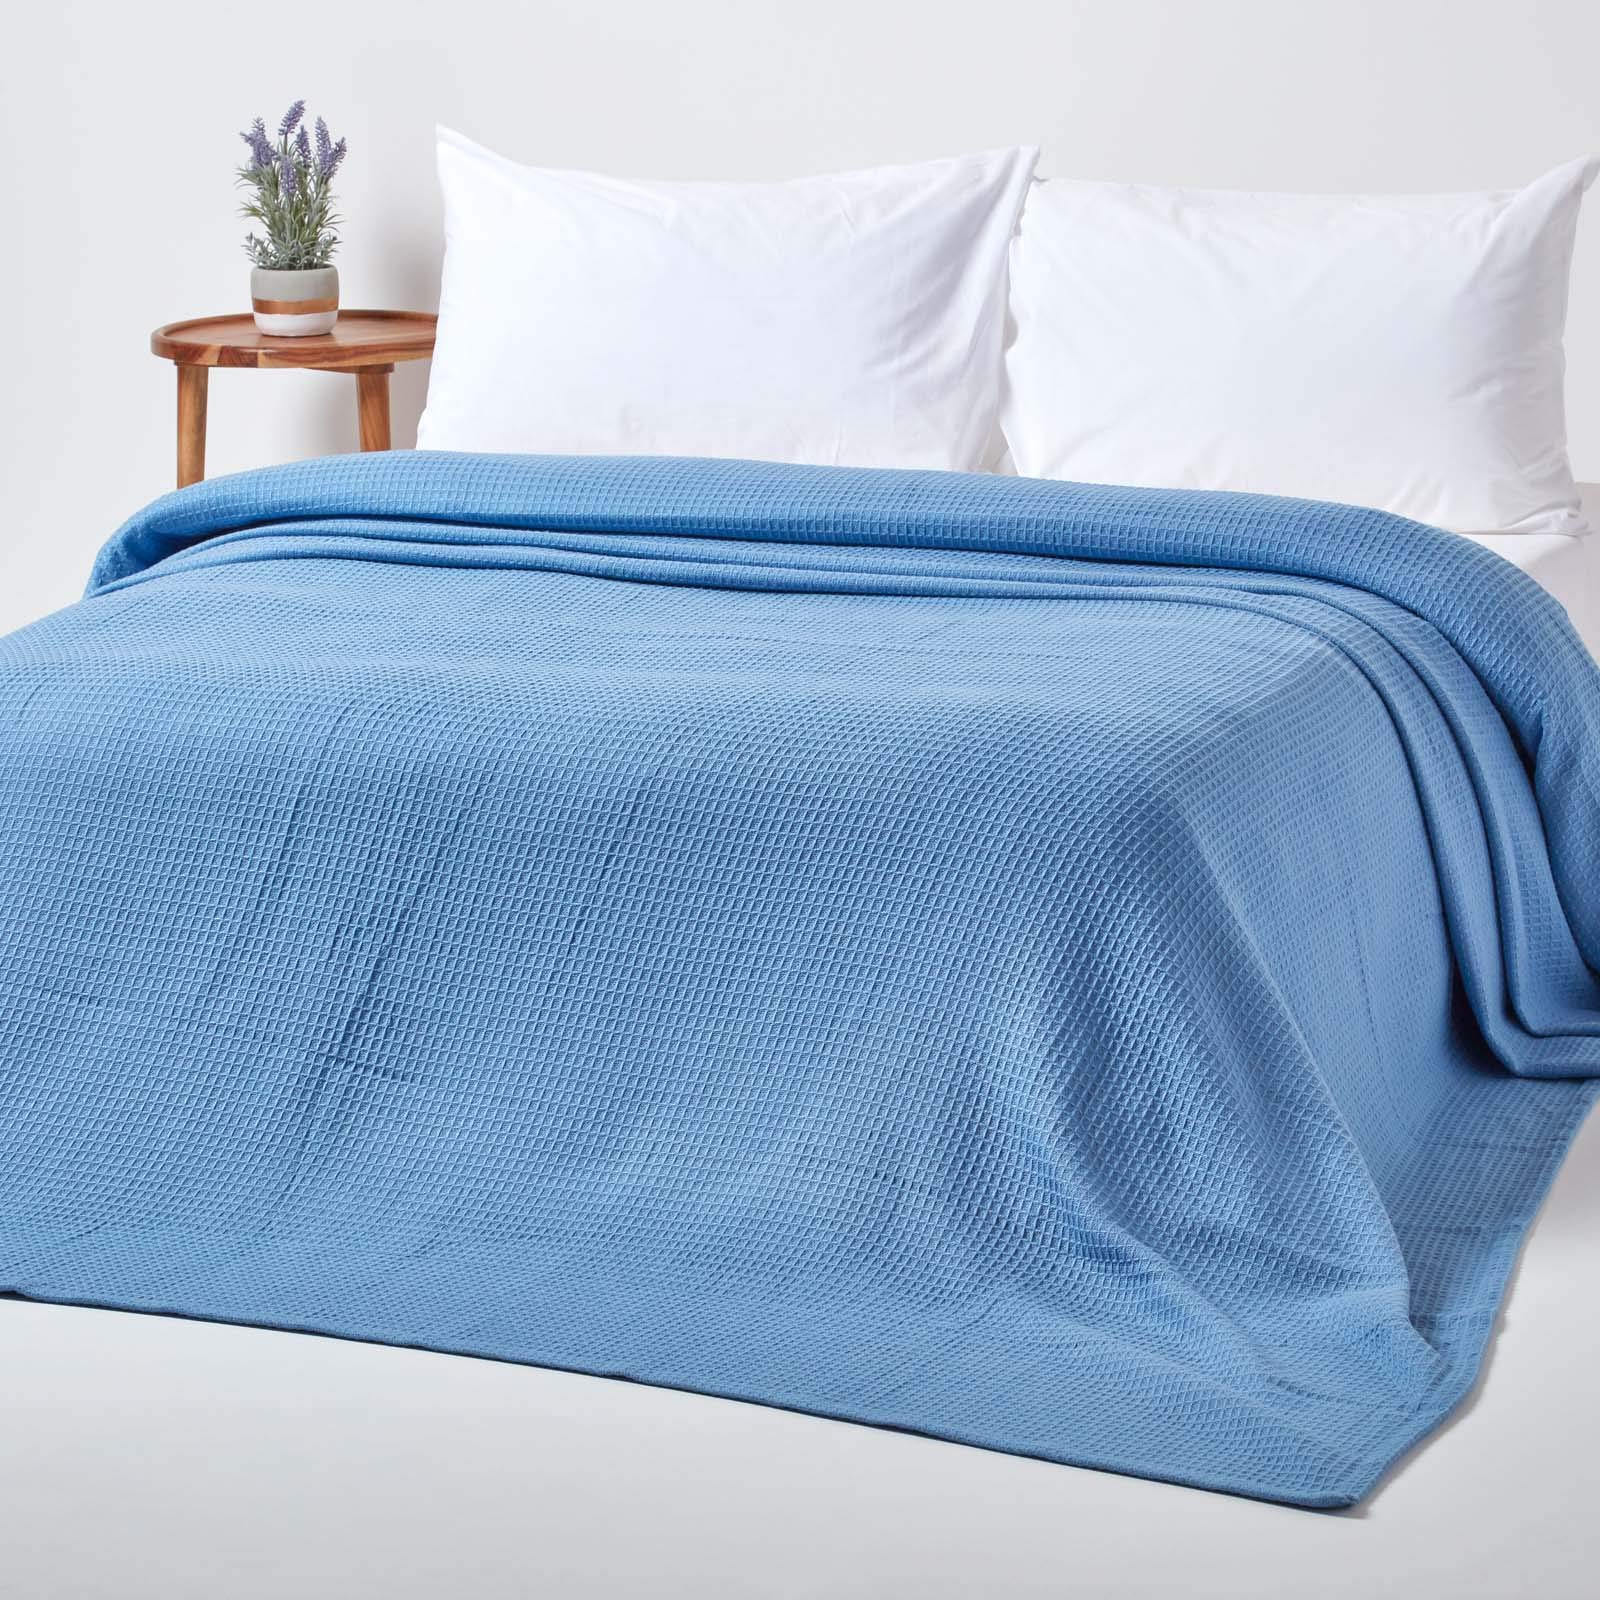 Homescapes Tagesdecke, Bettüberwurf aus 100% Bio-Baumwolle, blau, Piqué-Waffeldecke 180 x 230 cm